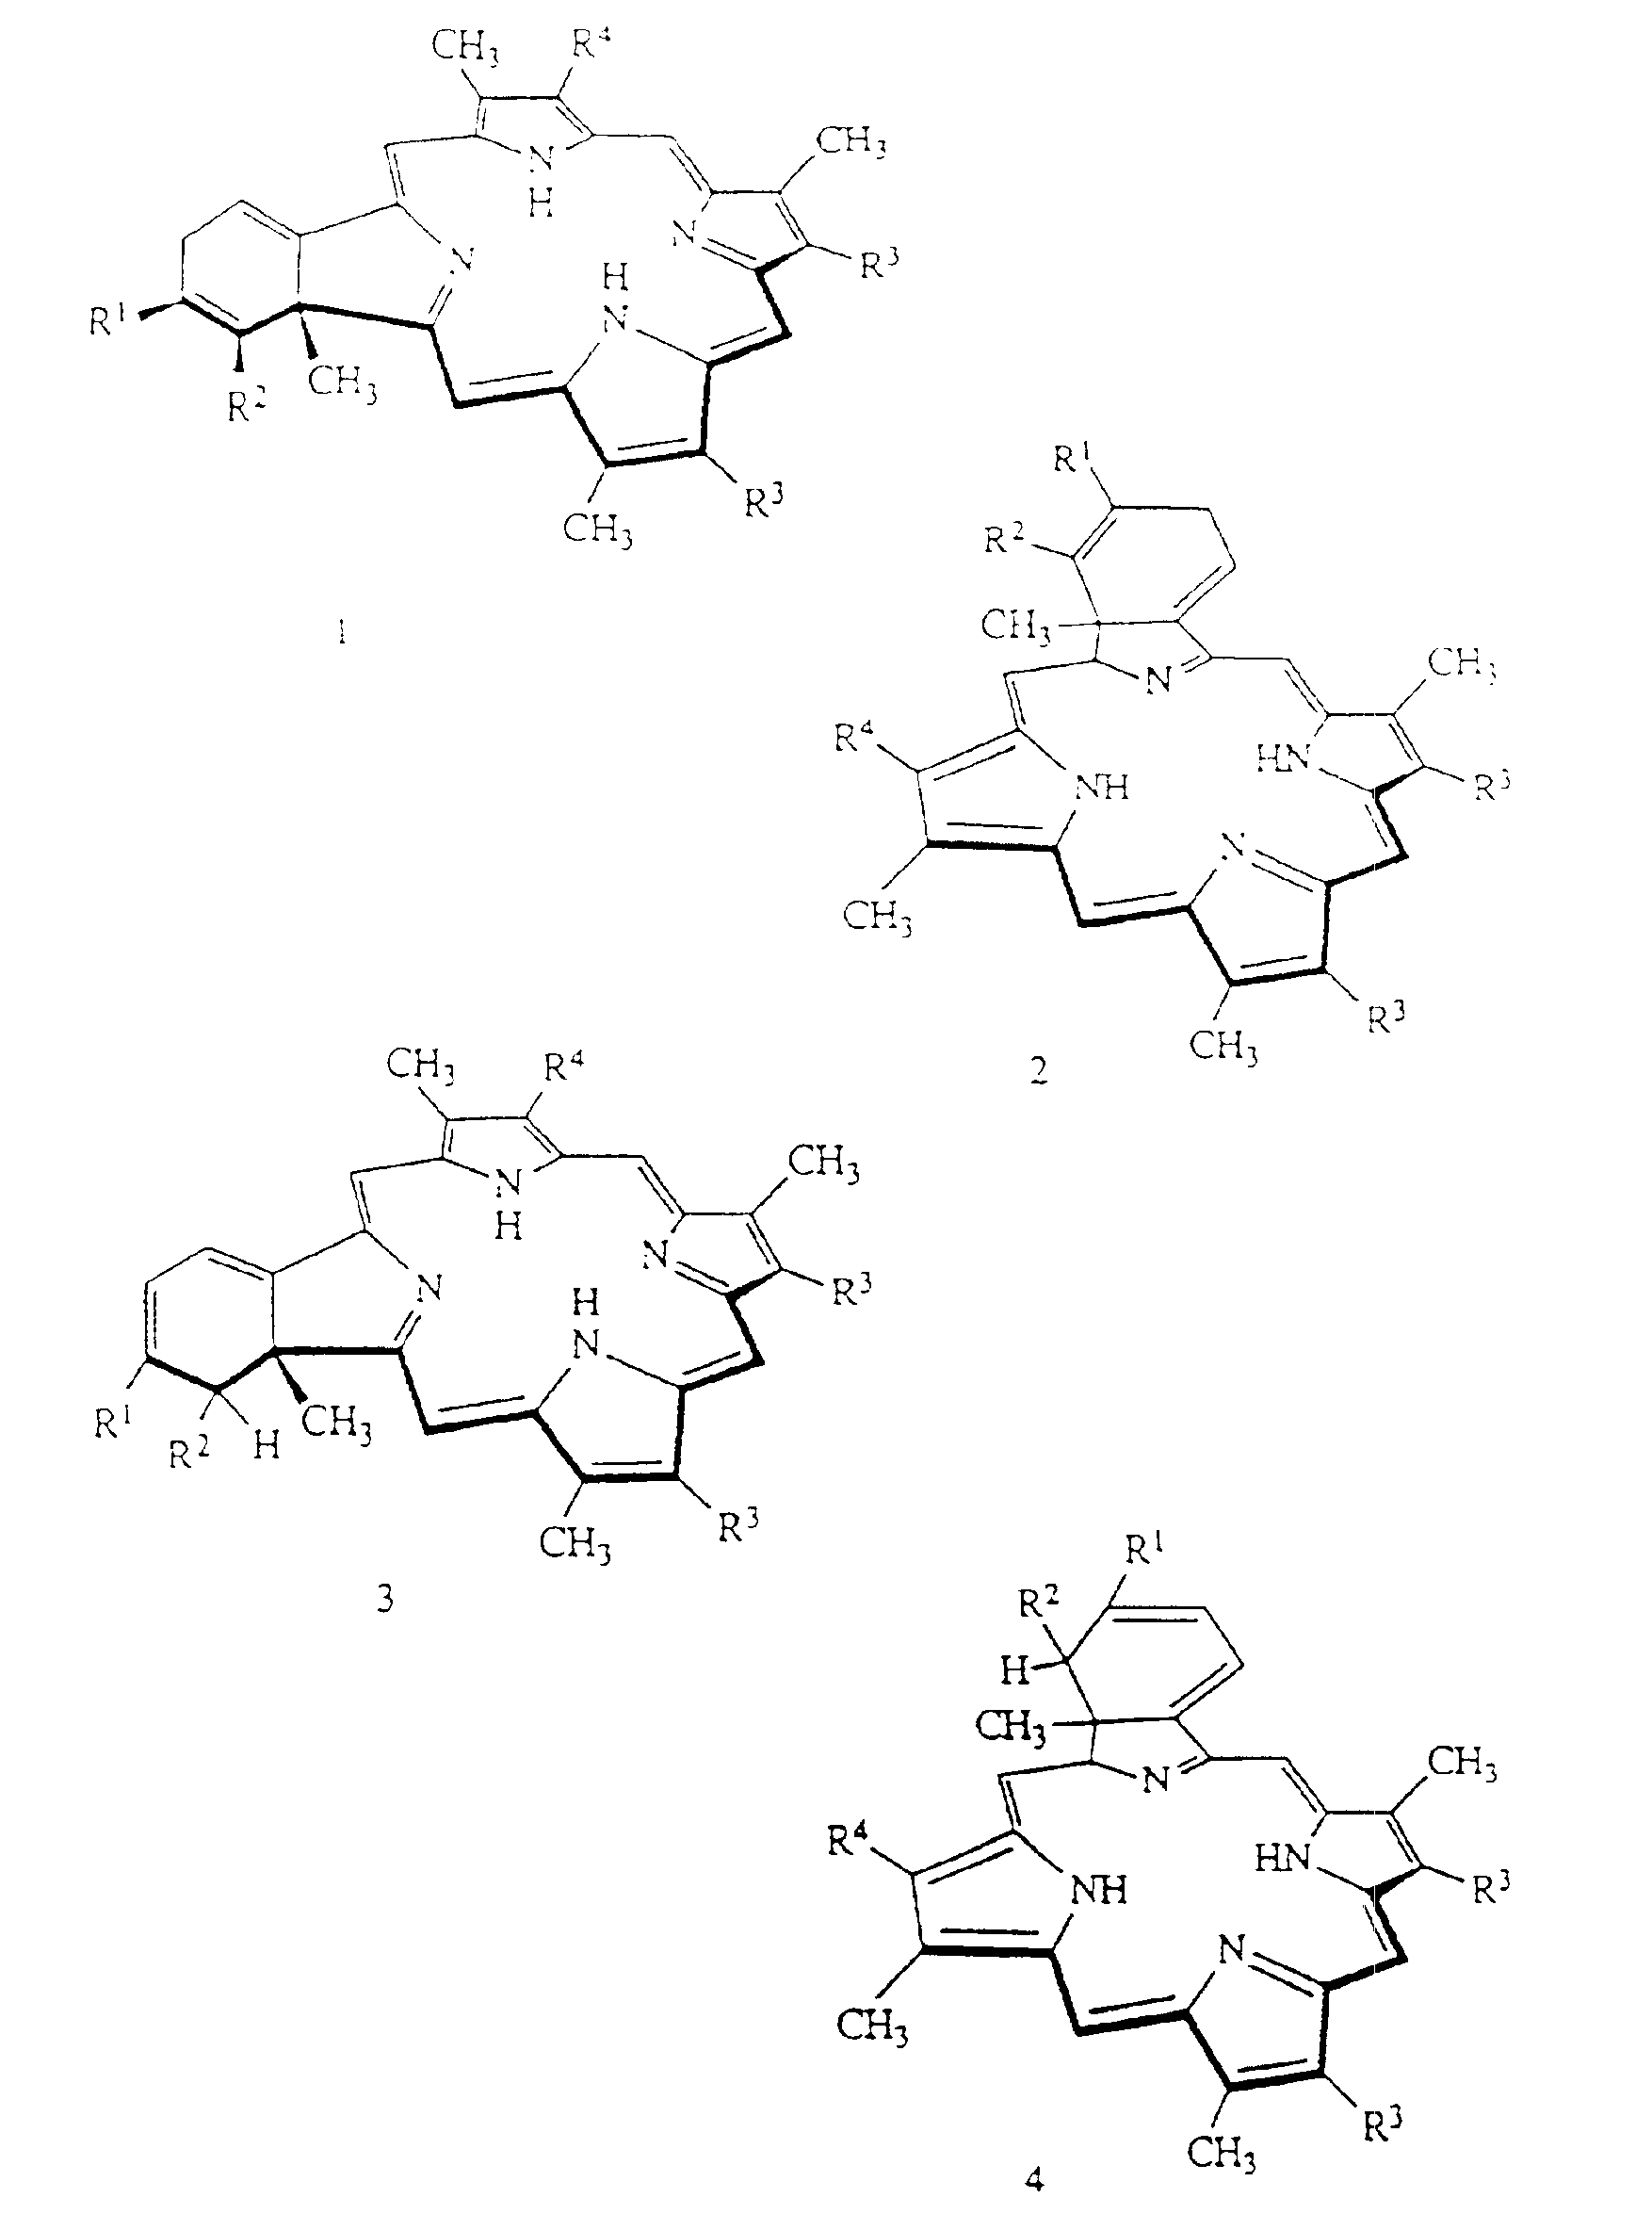 Liposome compositions of porphyrin photosensitizers